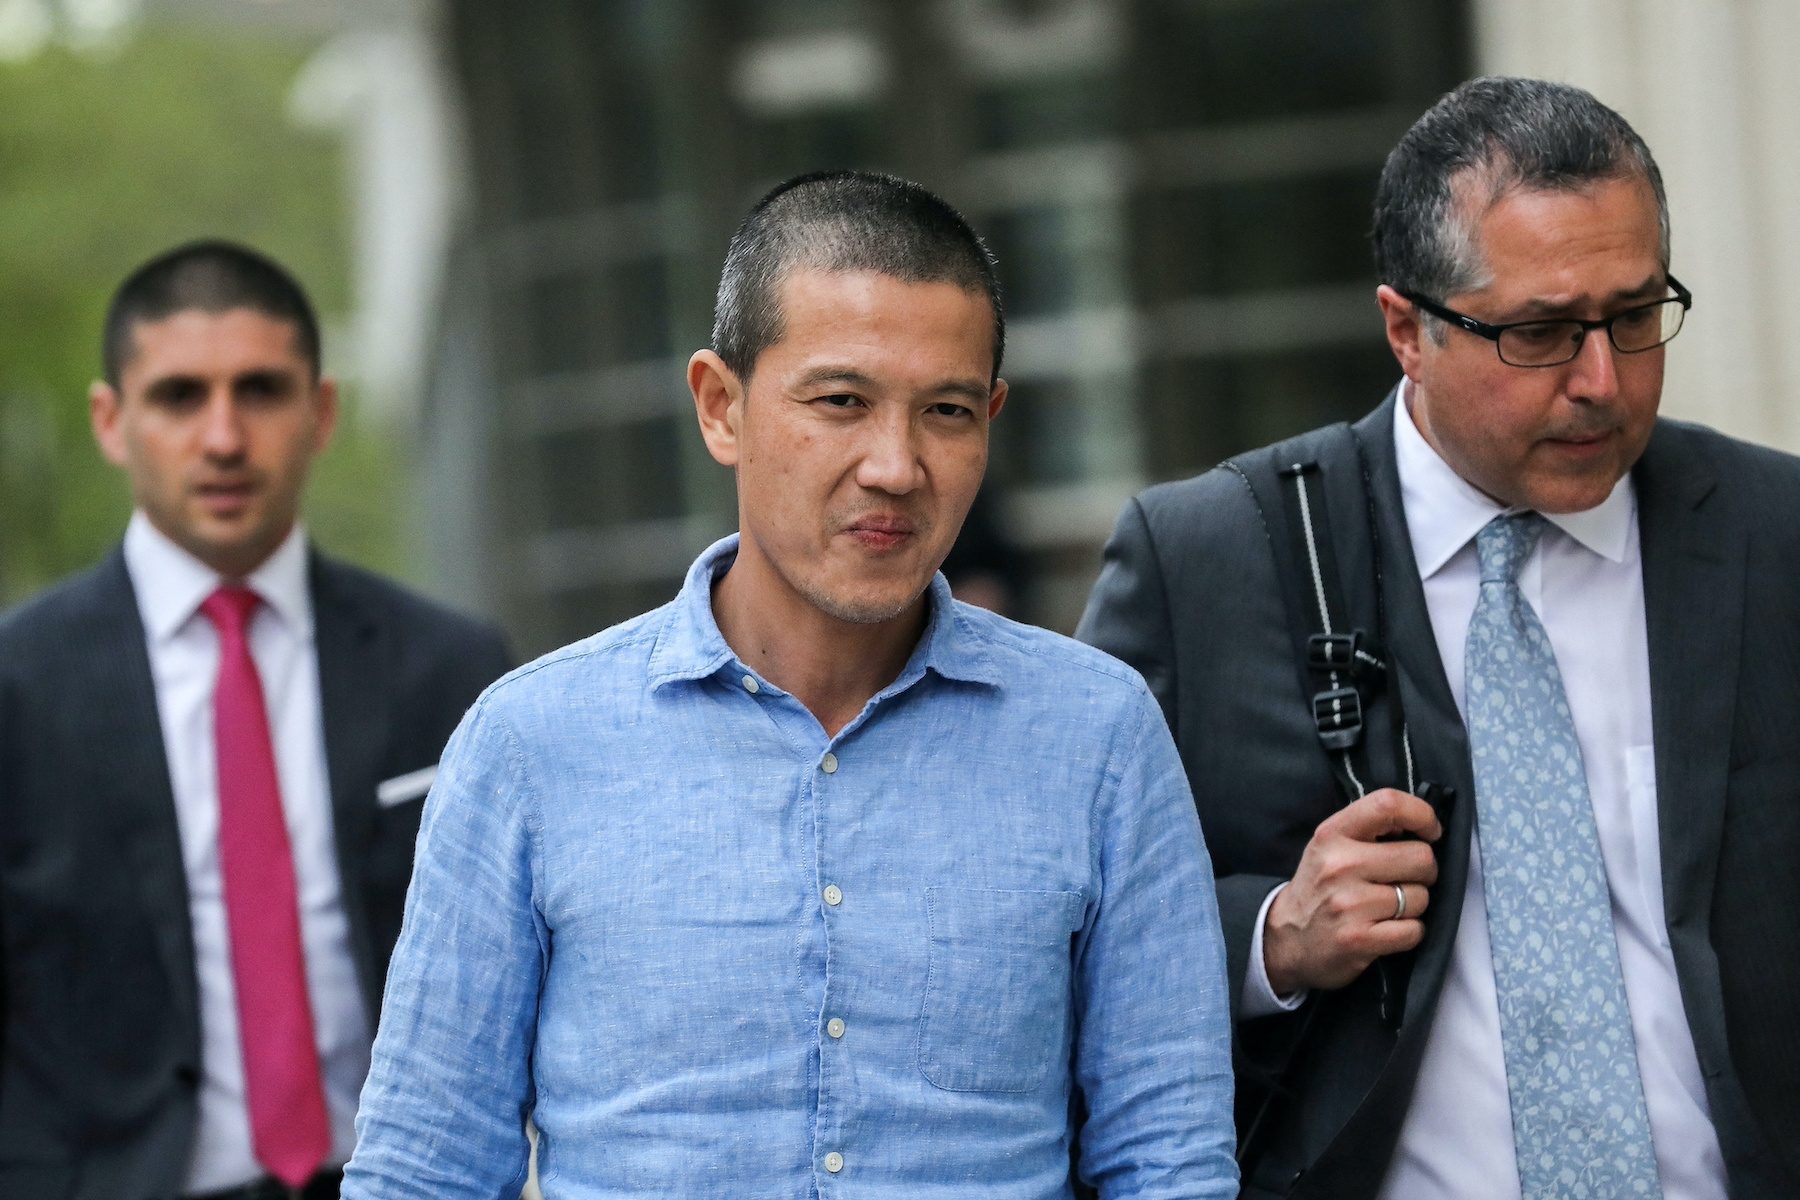 Prosecutor urges ex-Goldman banker’s conviction over 1MDB, defense blasts witness